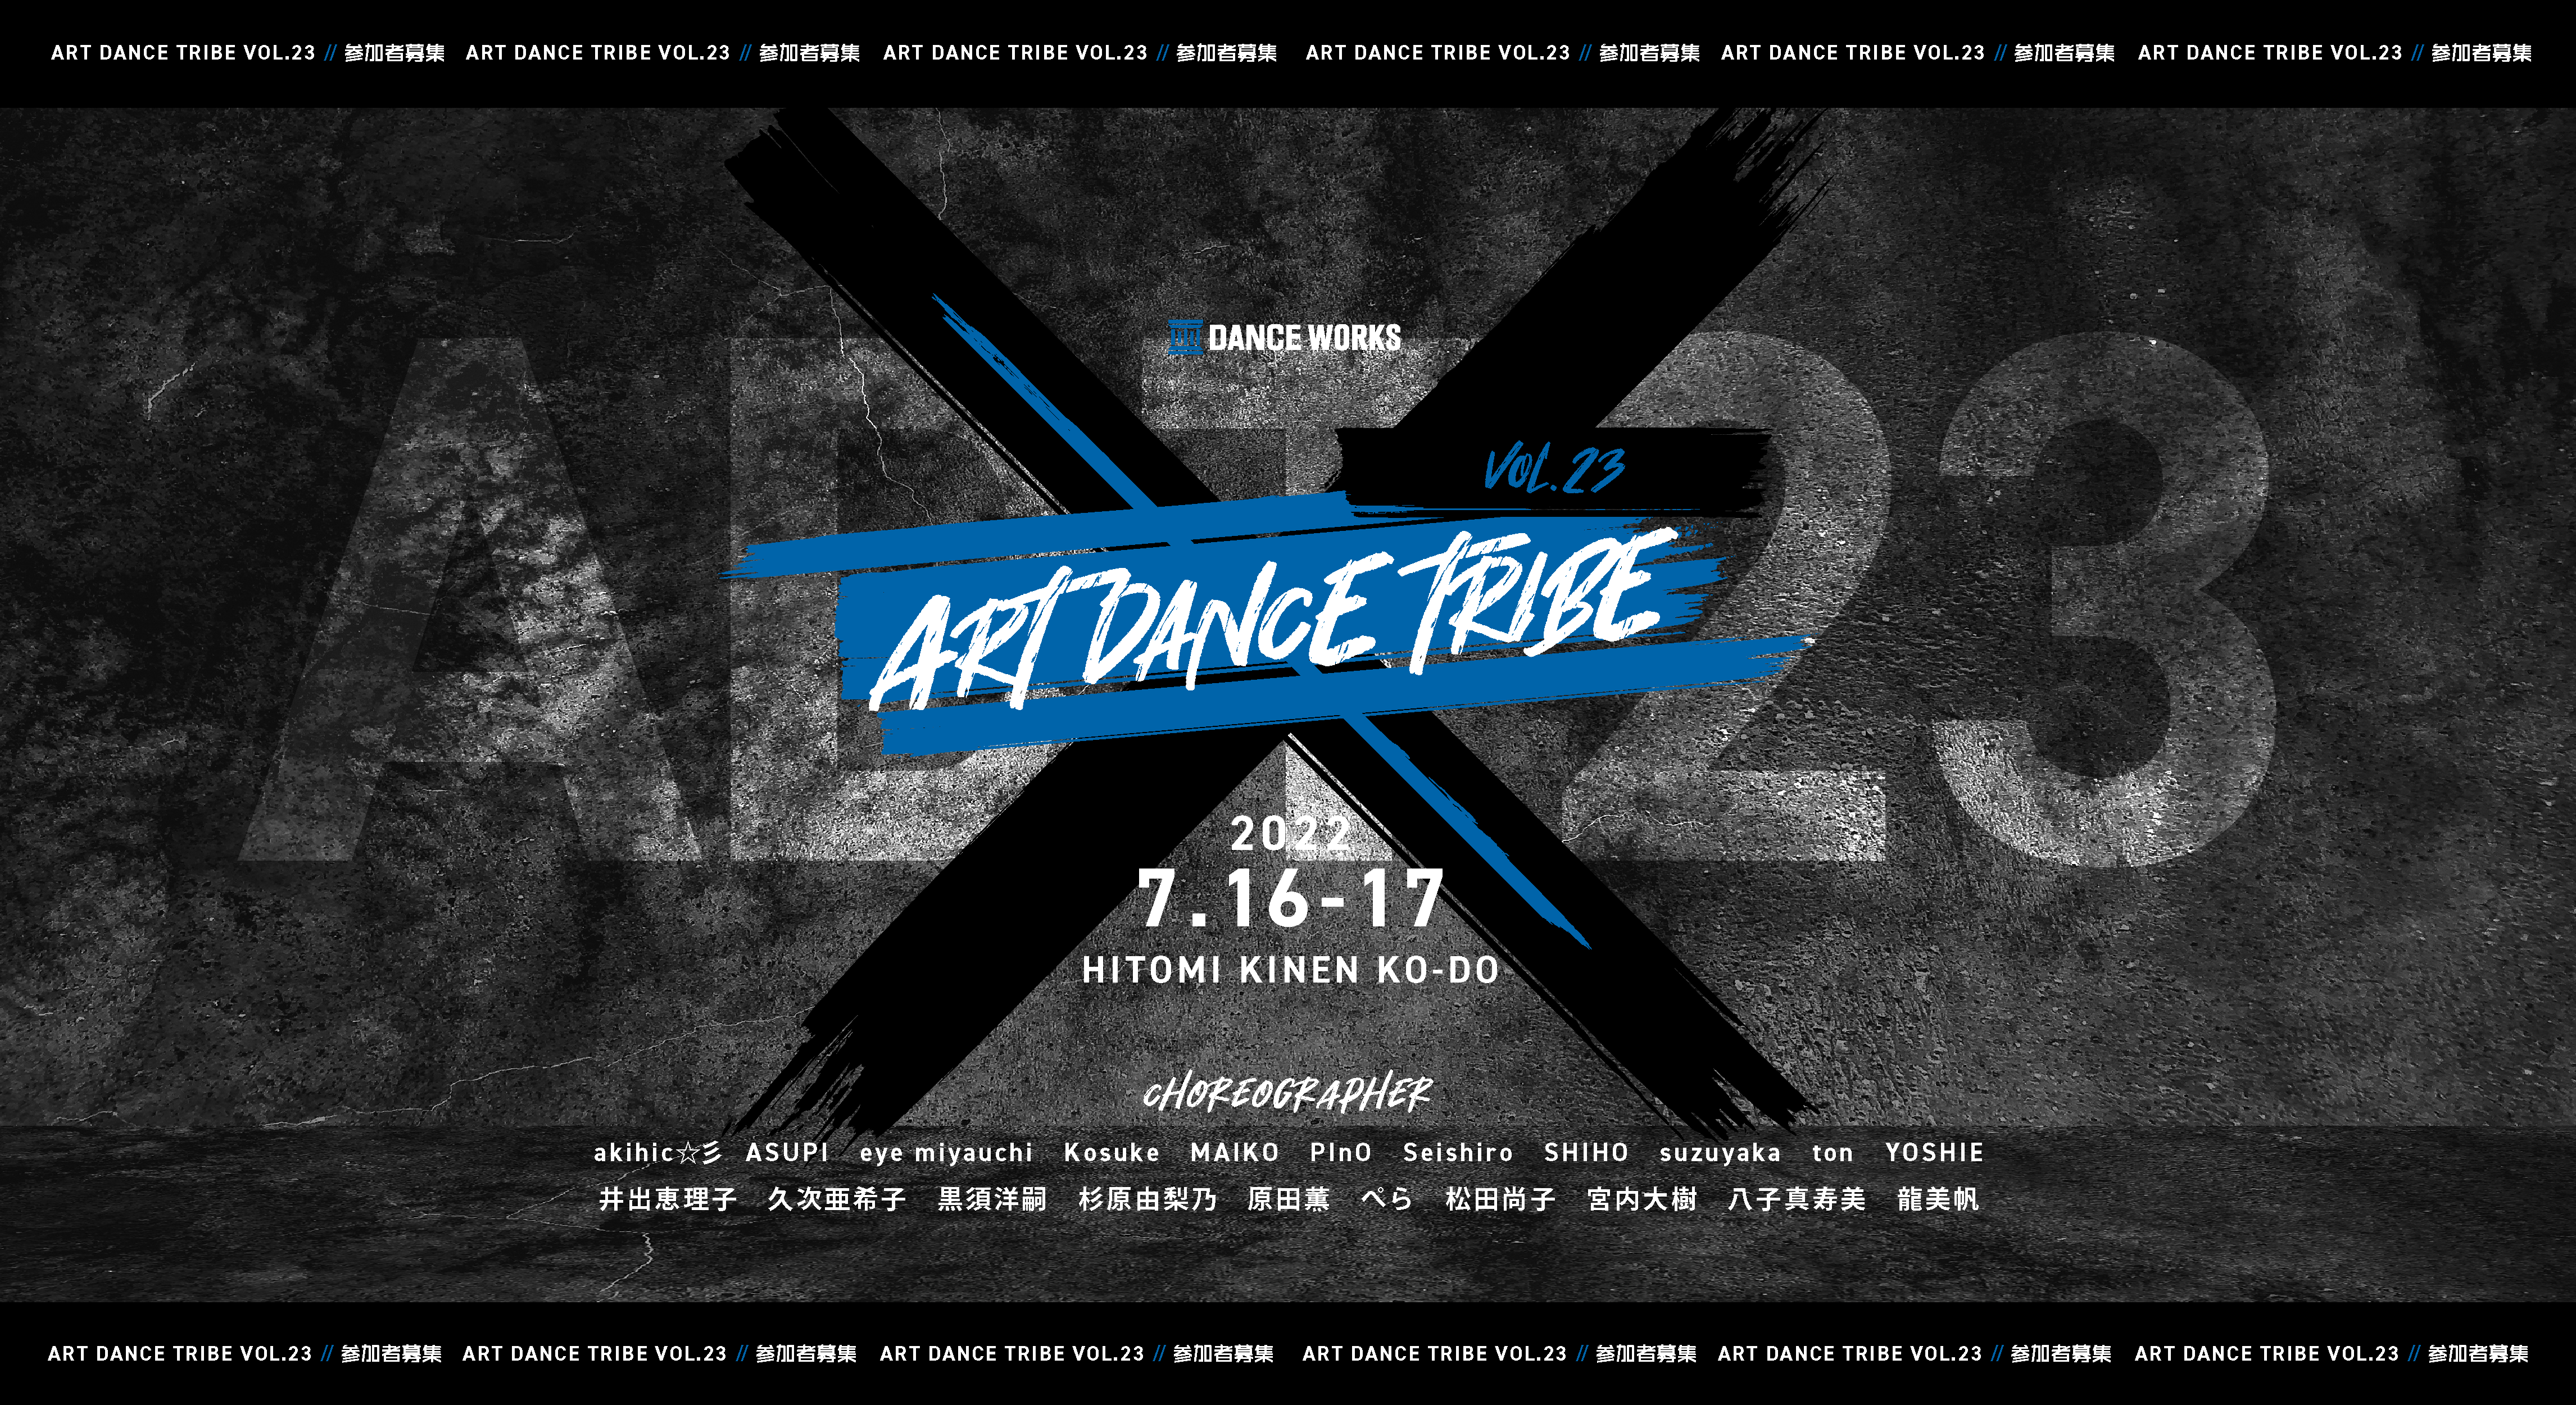 DANCE WORKS夏の発表会2022 – ART DANCE TRIBE vol.23 – 開催決定！